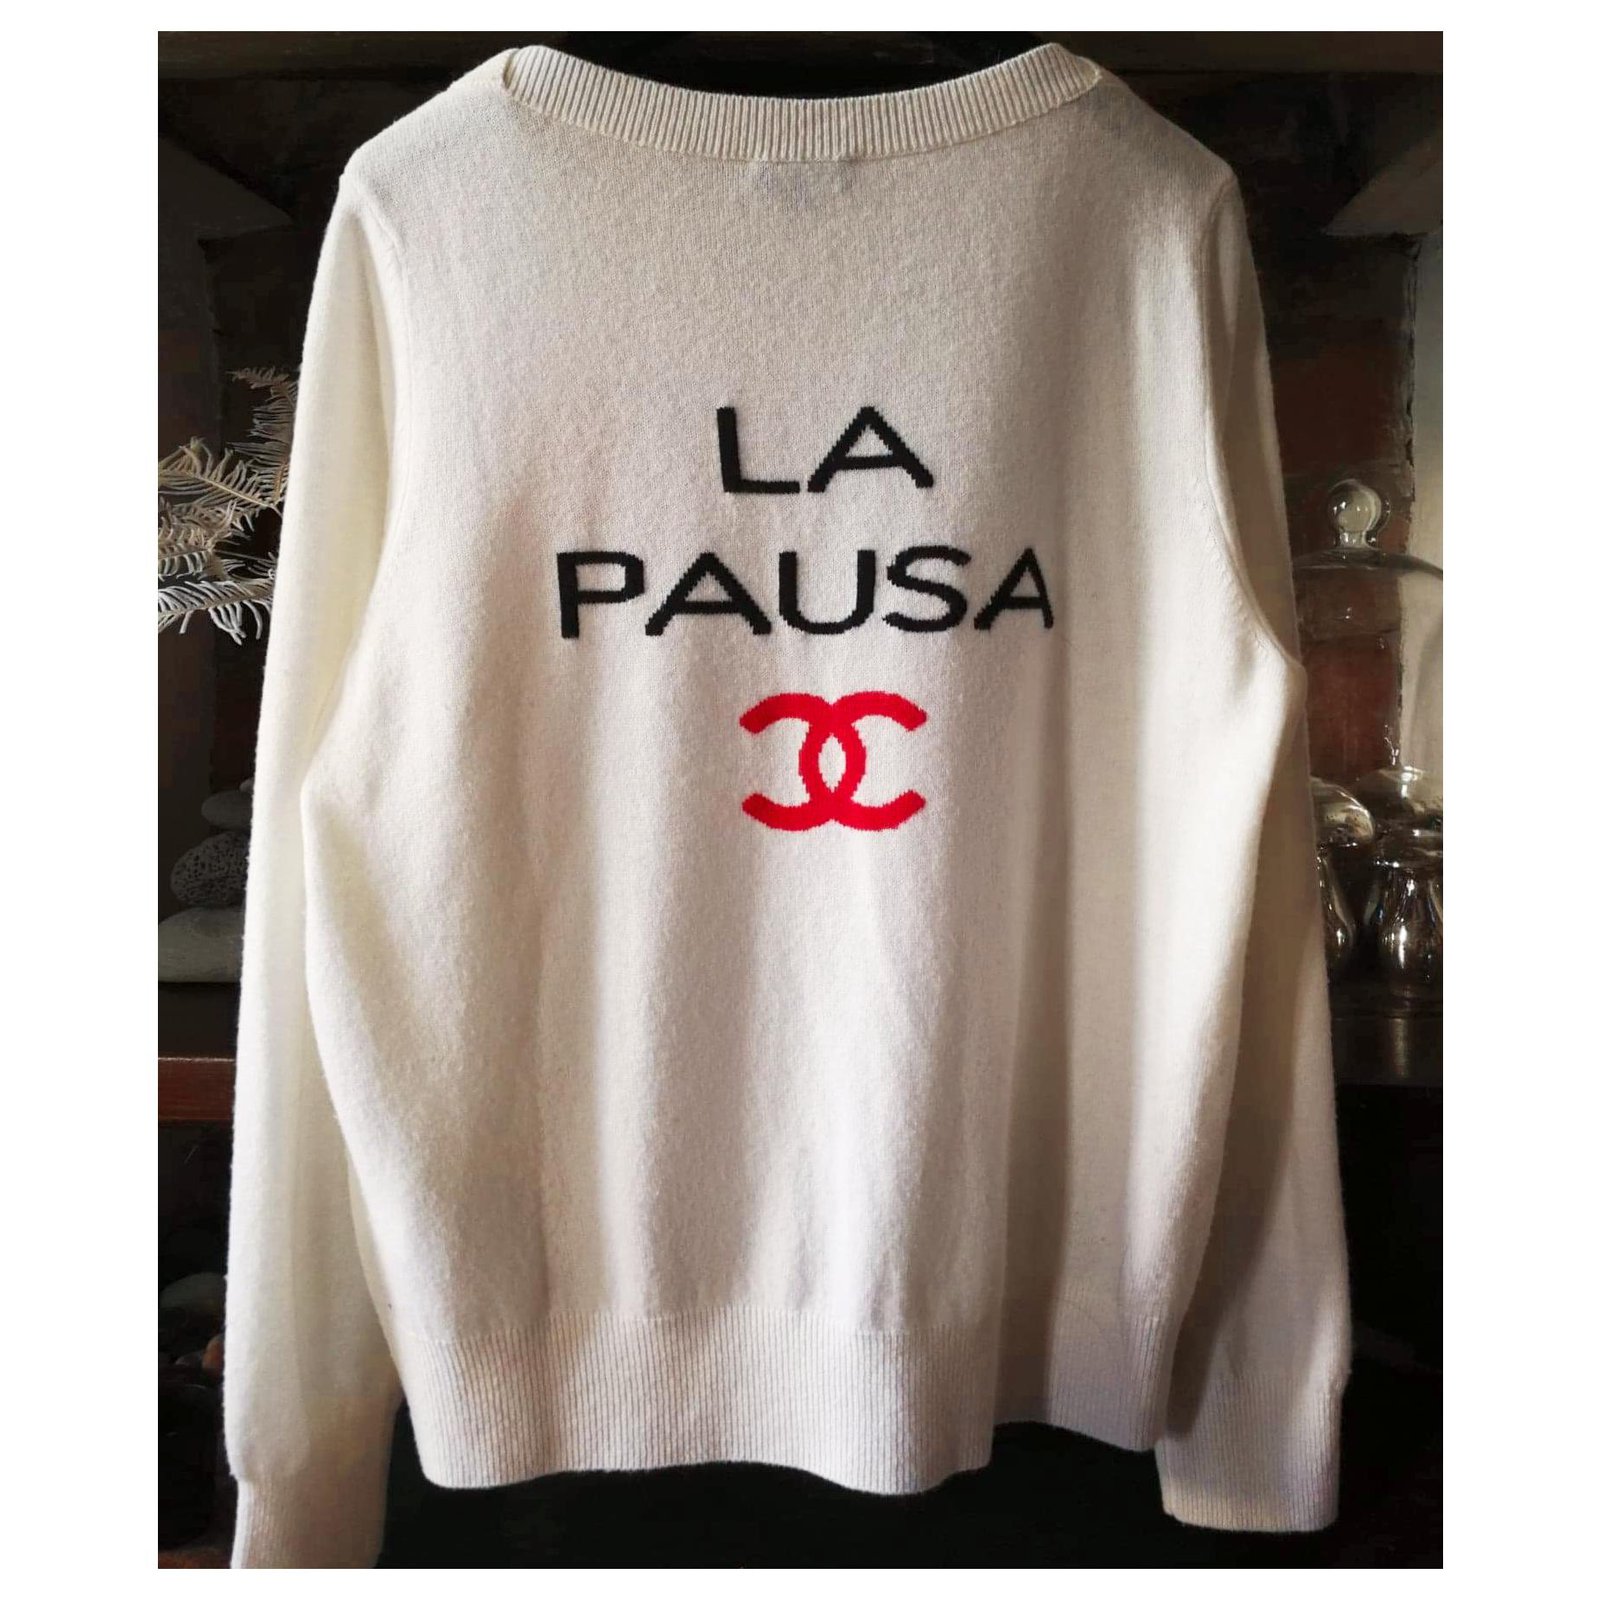 Chanel Pre-owned 2019 La Pausa graphic-print T-Shirt - Blue